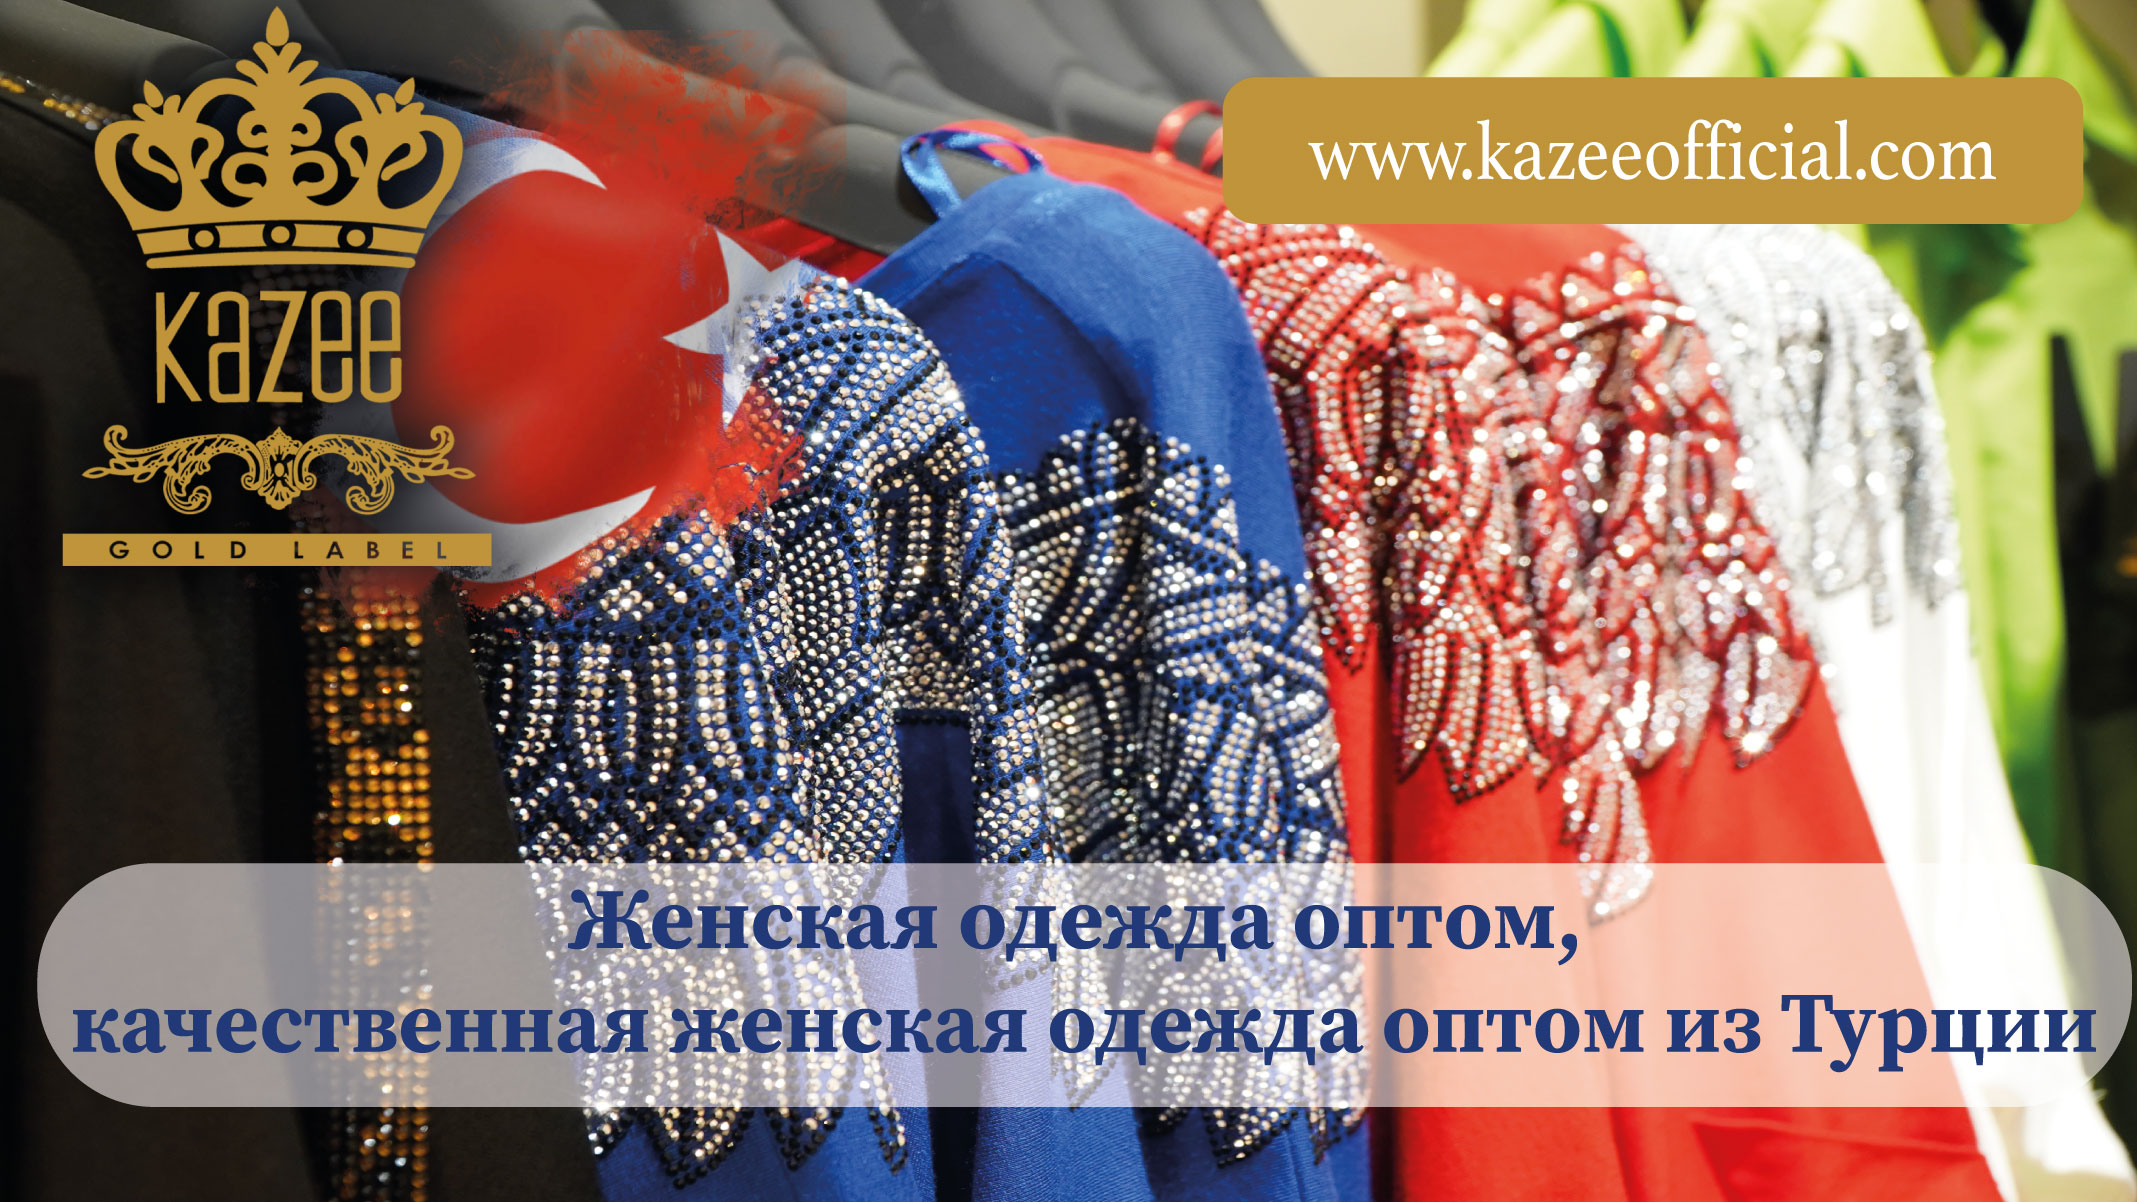 Women's clothing wholesale, high-quality women's clothing wholesale from Turkey.